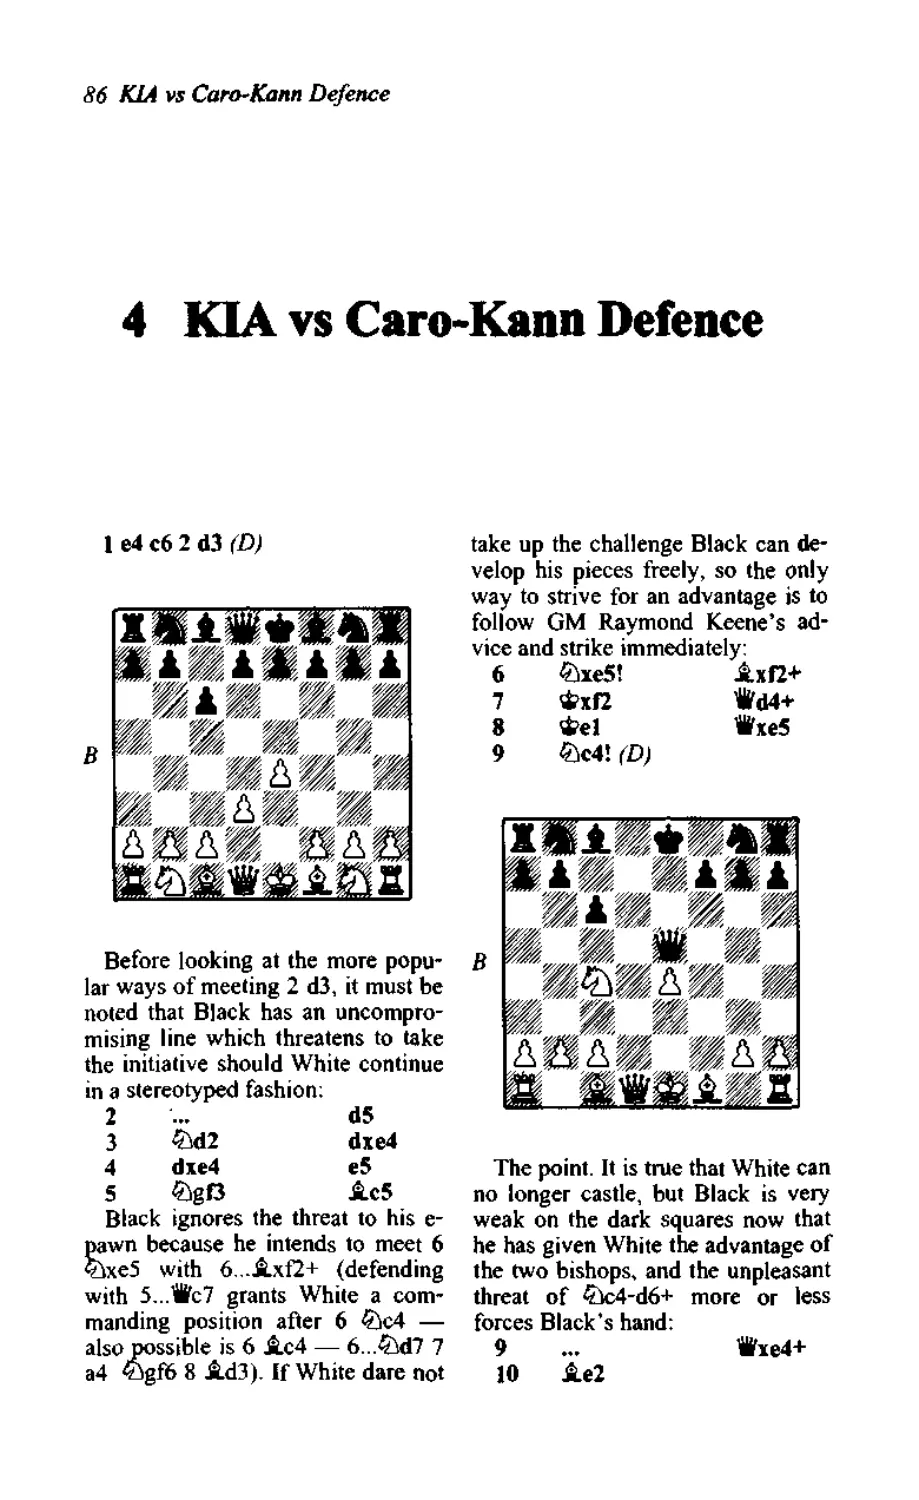 4. KIA vs Caro-Kann defence